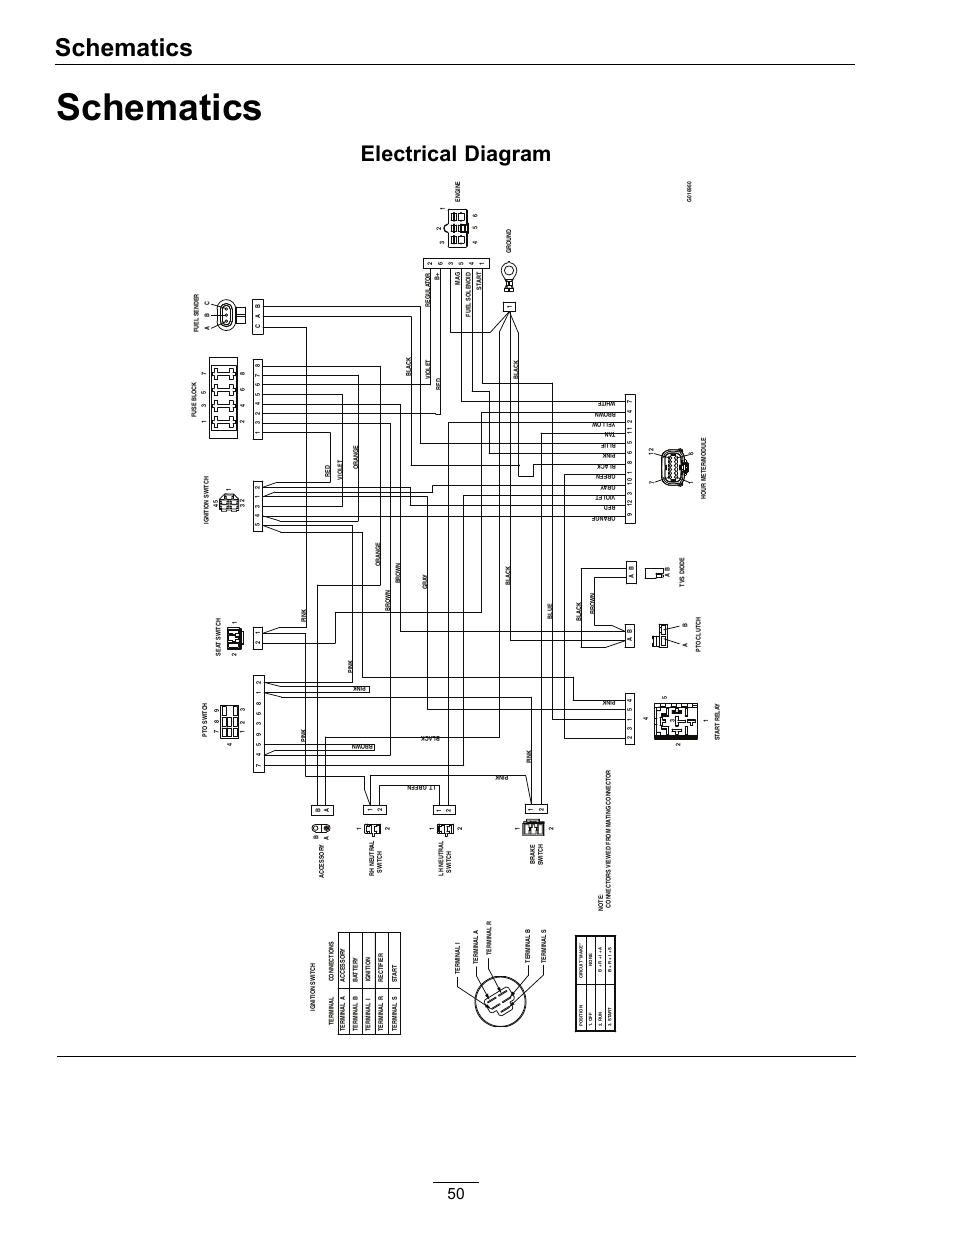 dishnetwork hopper wiring diagram